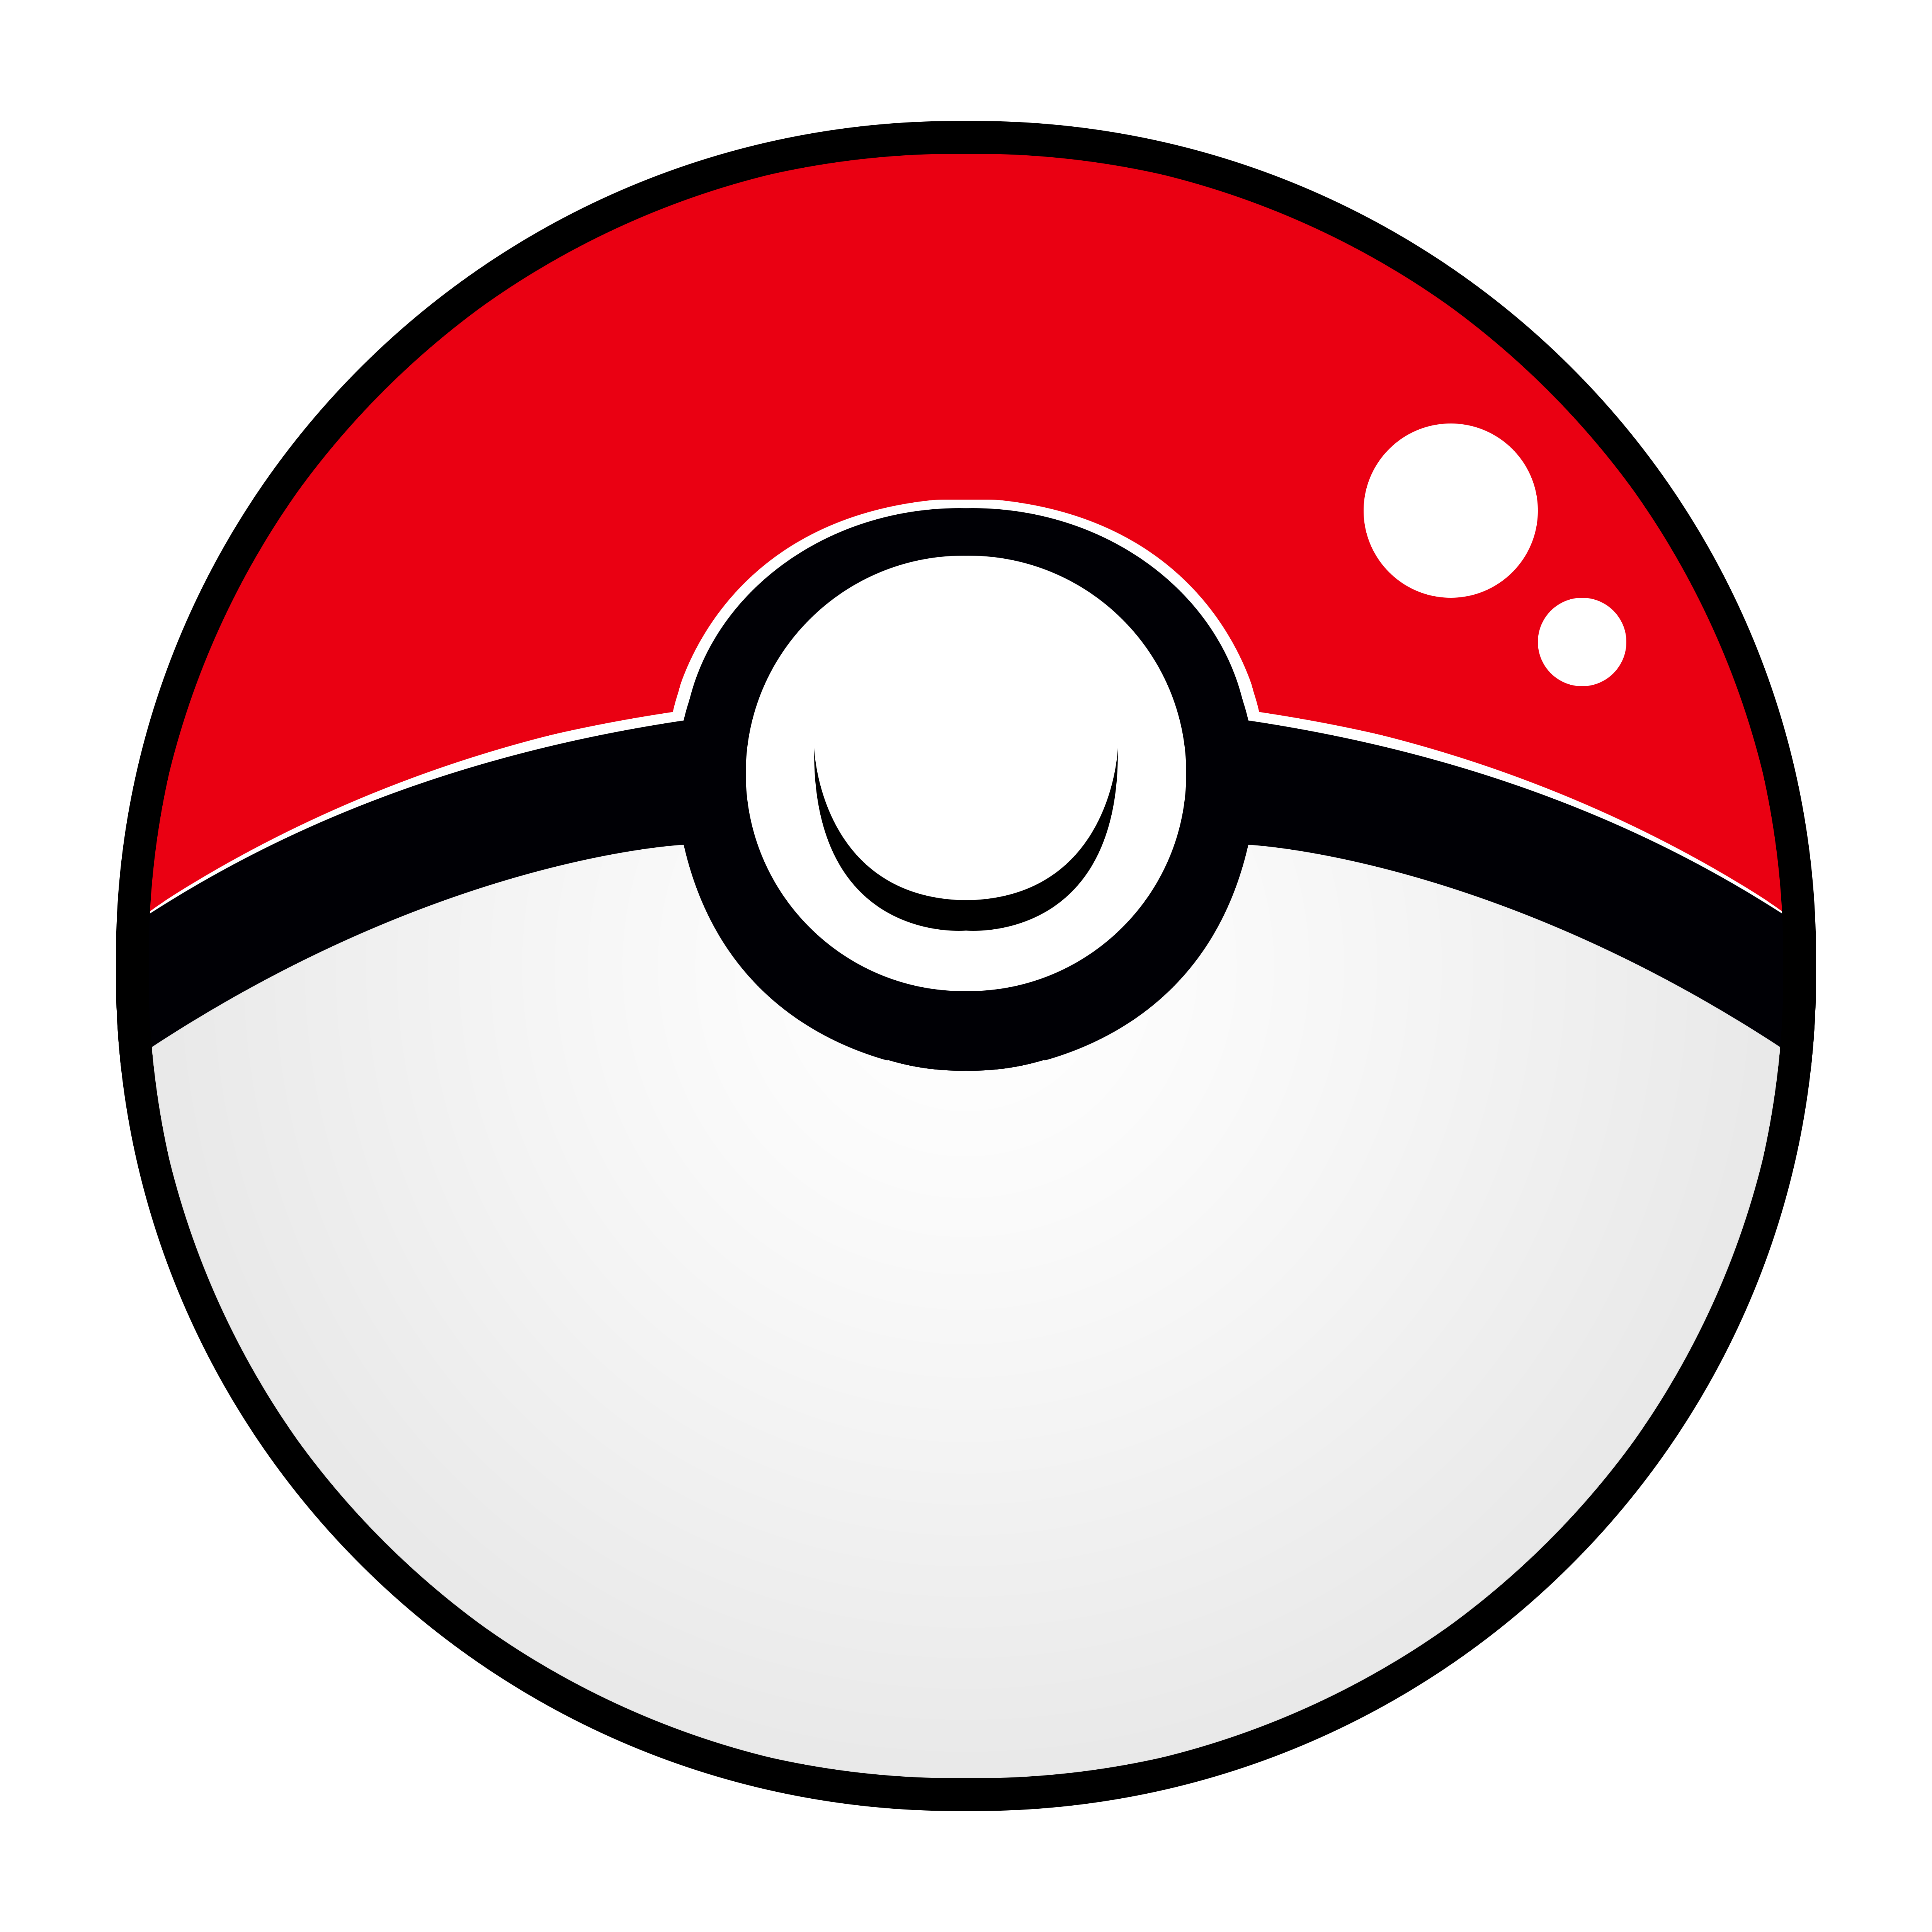 Free: Pokeball, pokemon ball PNG images free download 